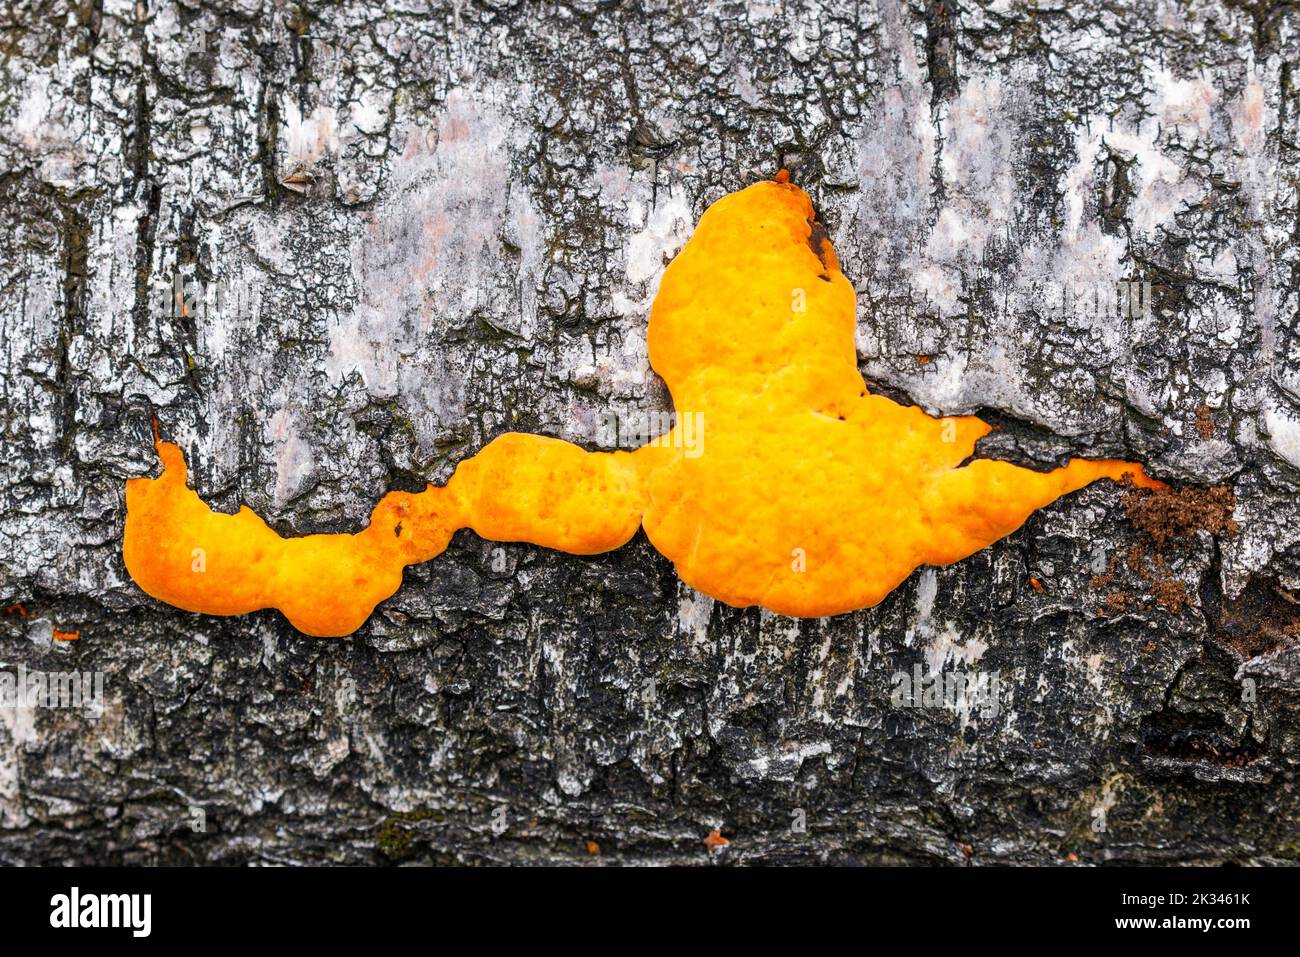 Orange mushroom on a birch tree, Germany Stock Photo